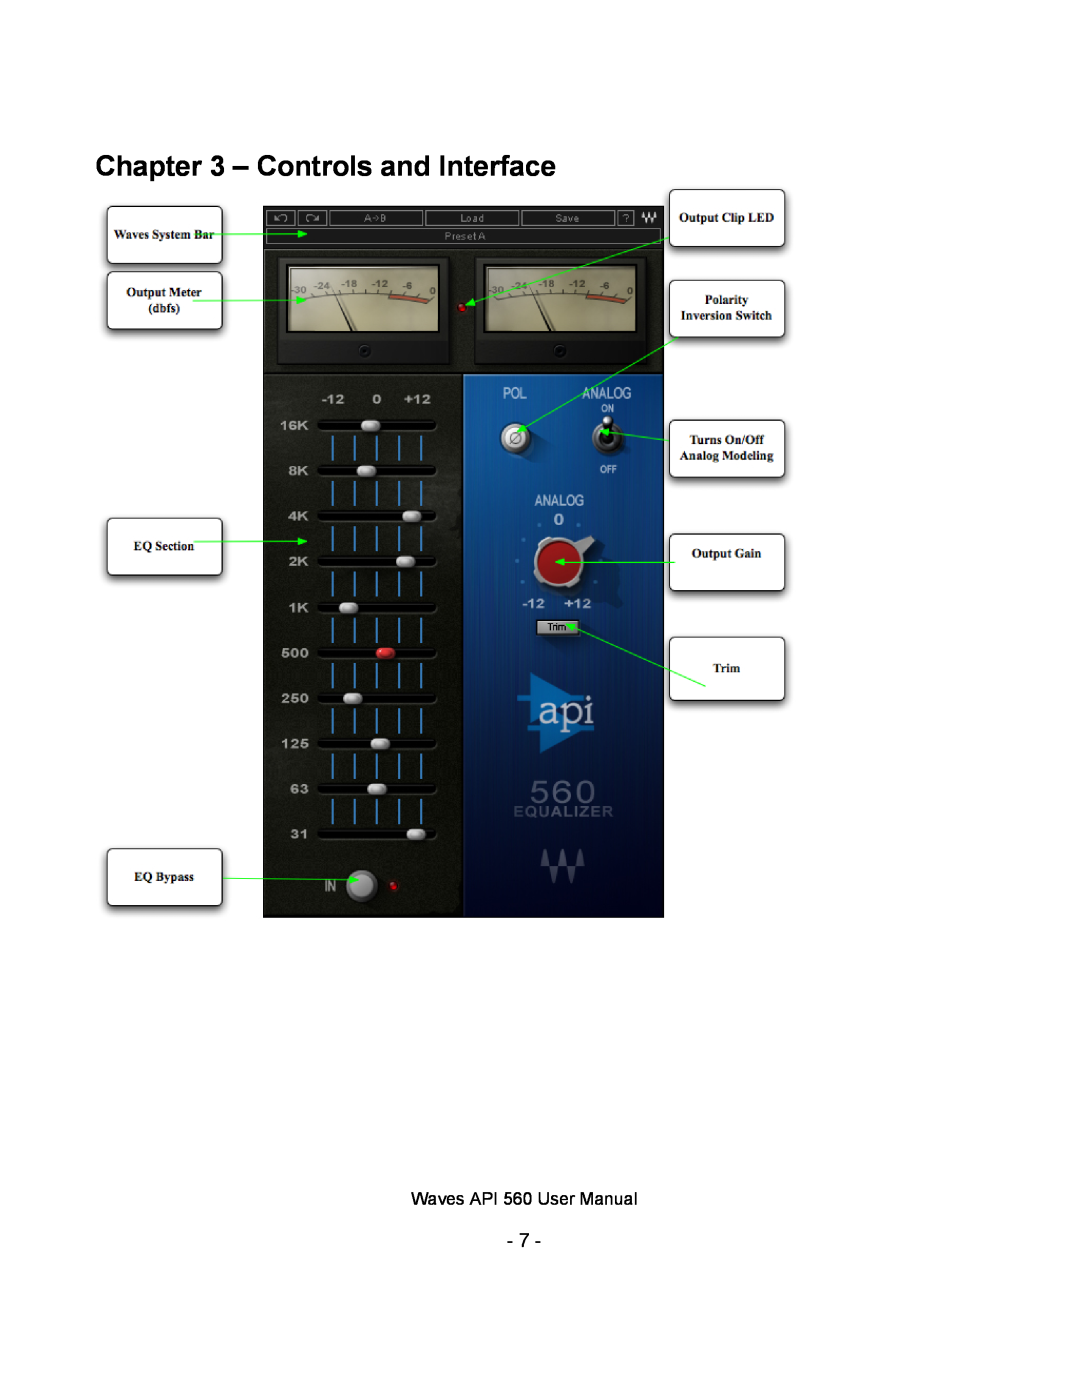 Waves API560 user manual Controls and Interface 